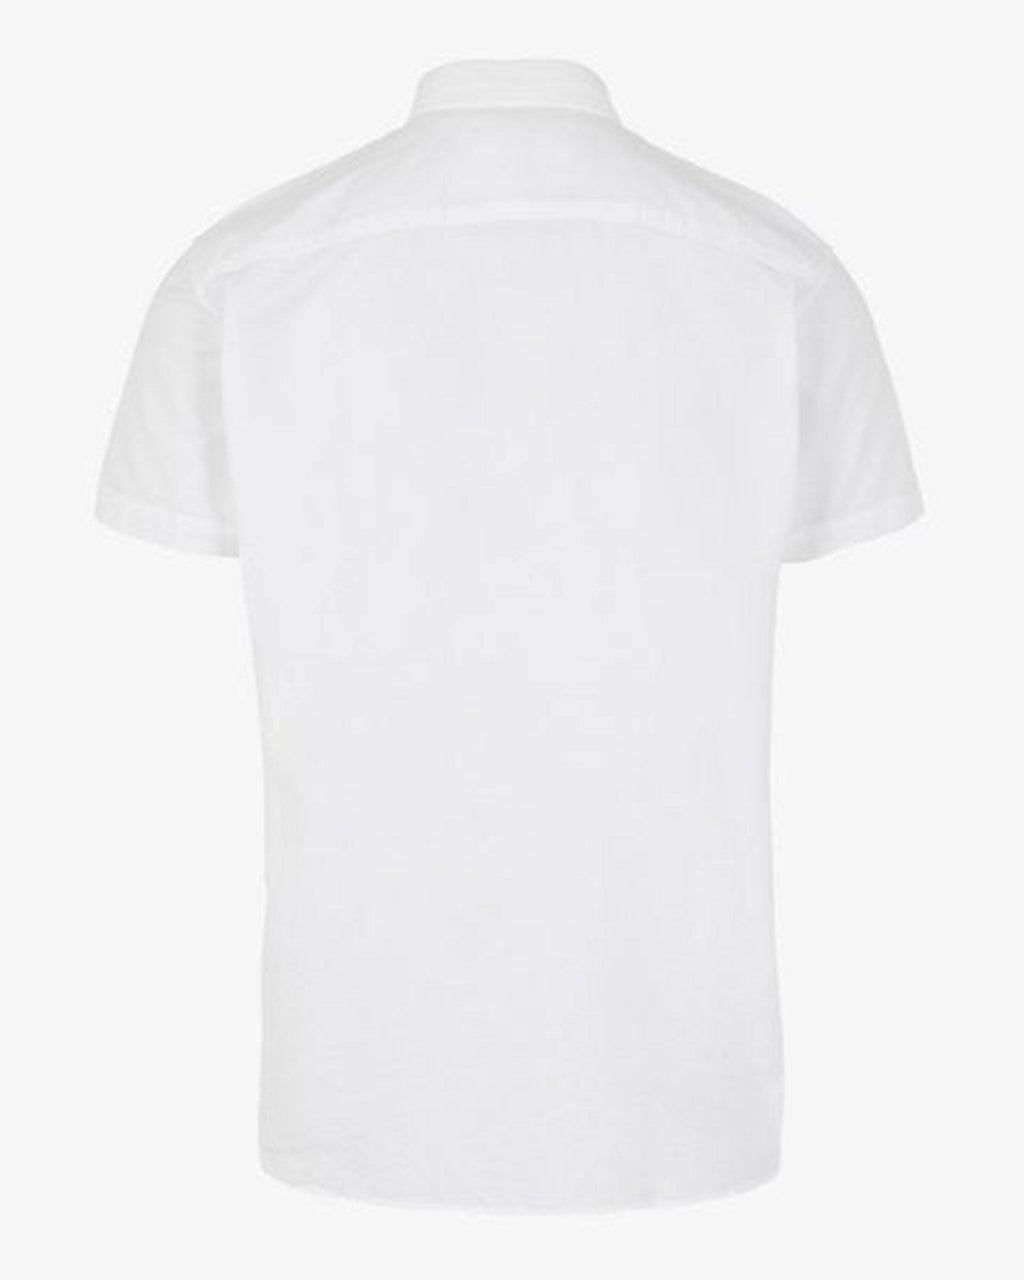 Klassisches Hemd kurzärmelig - Weiß